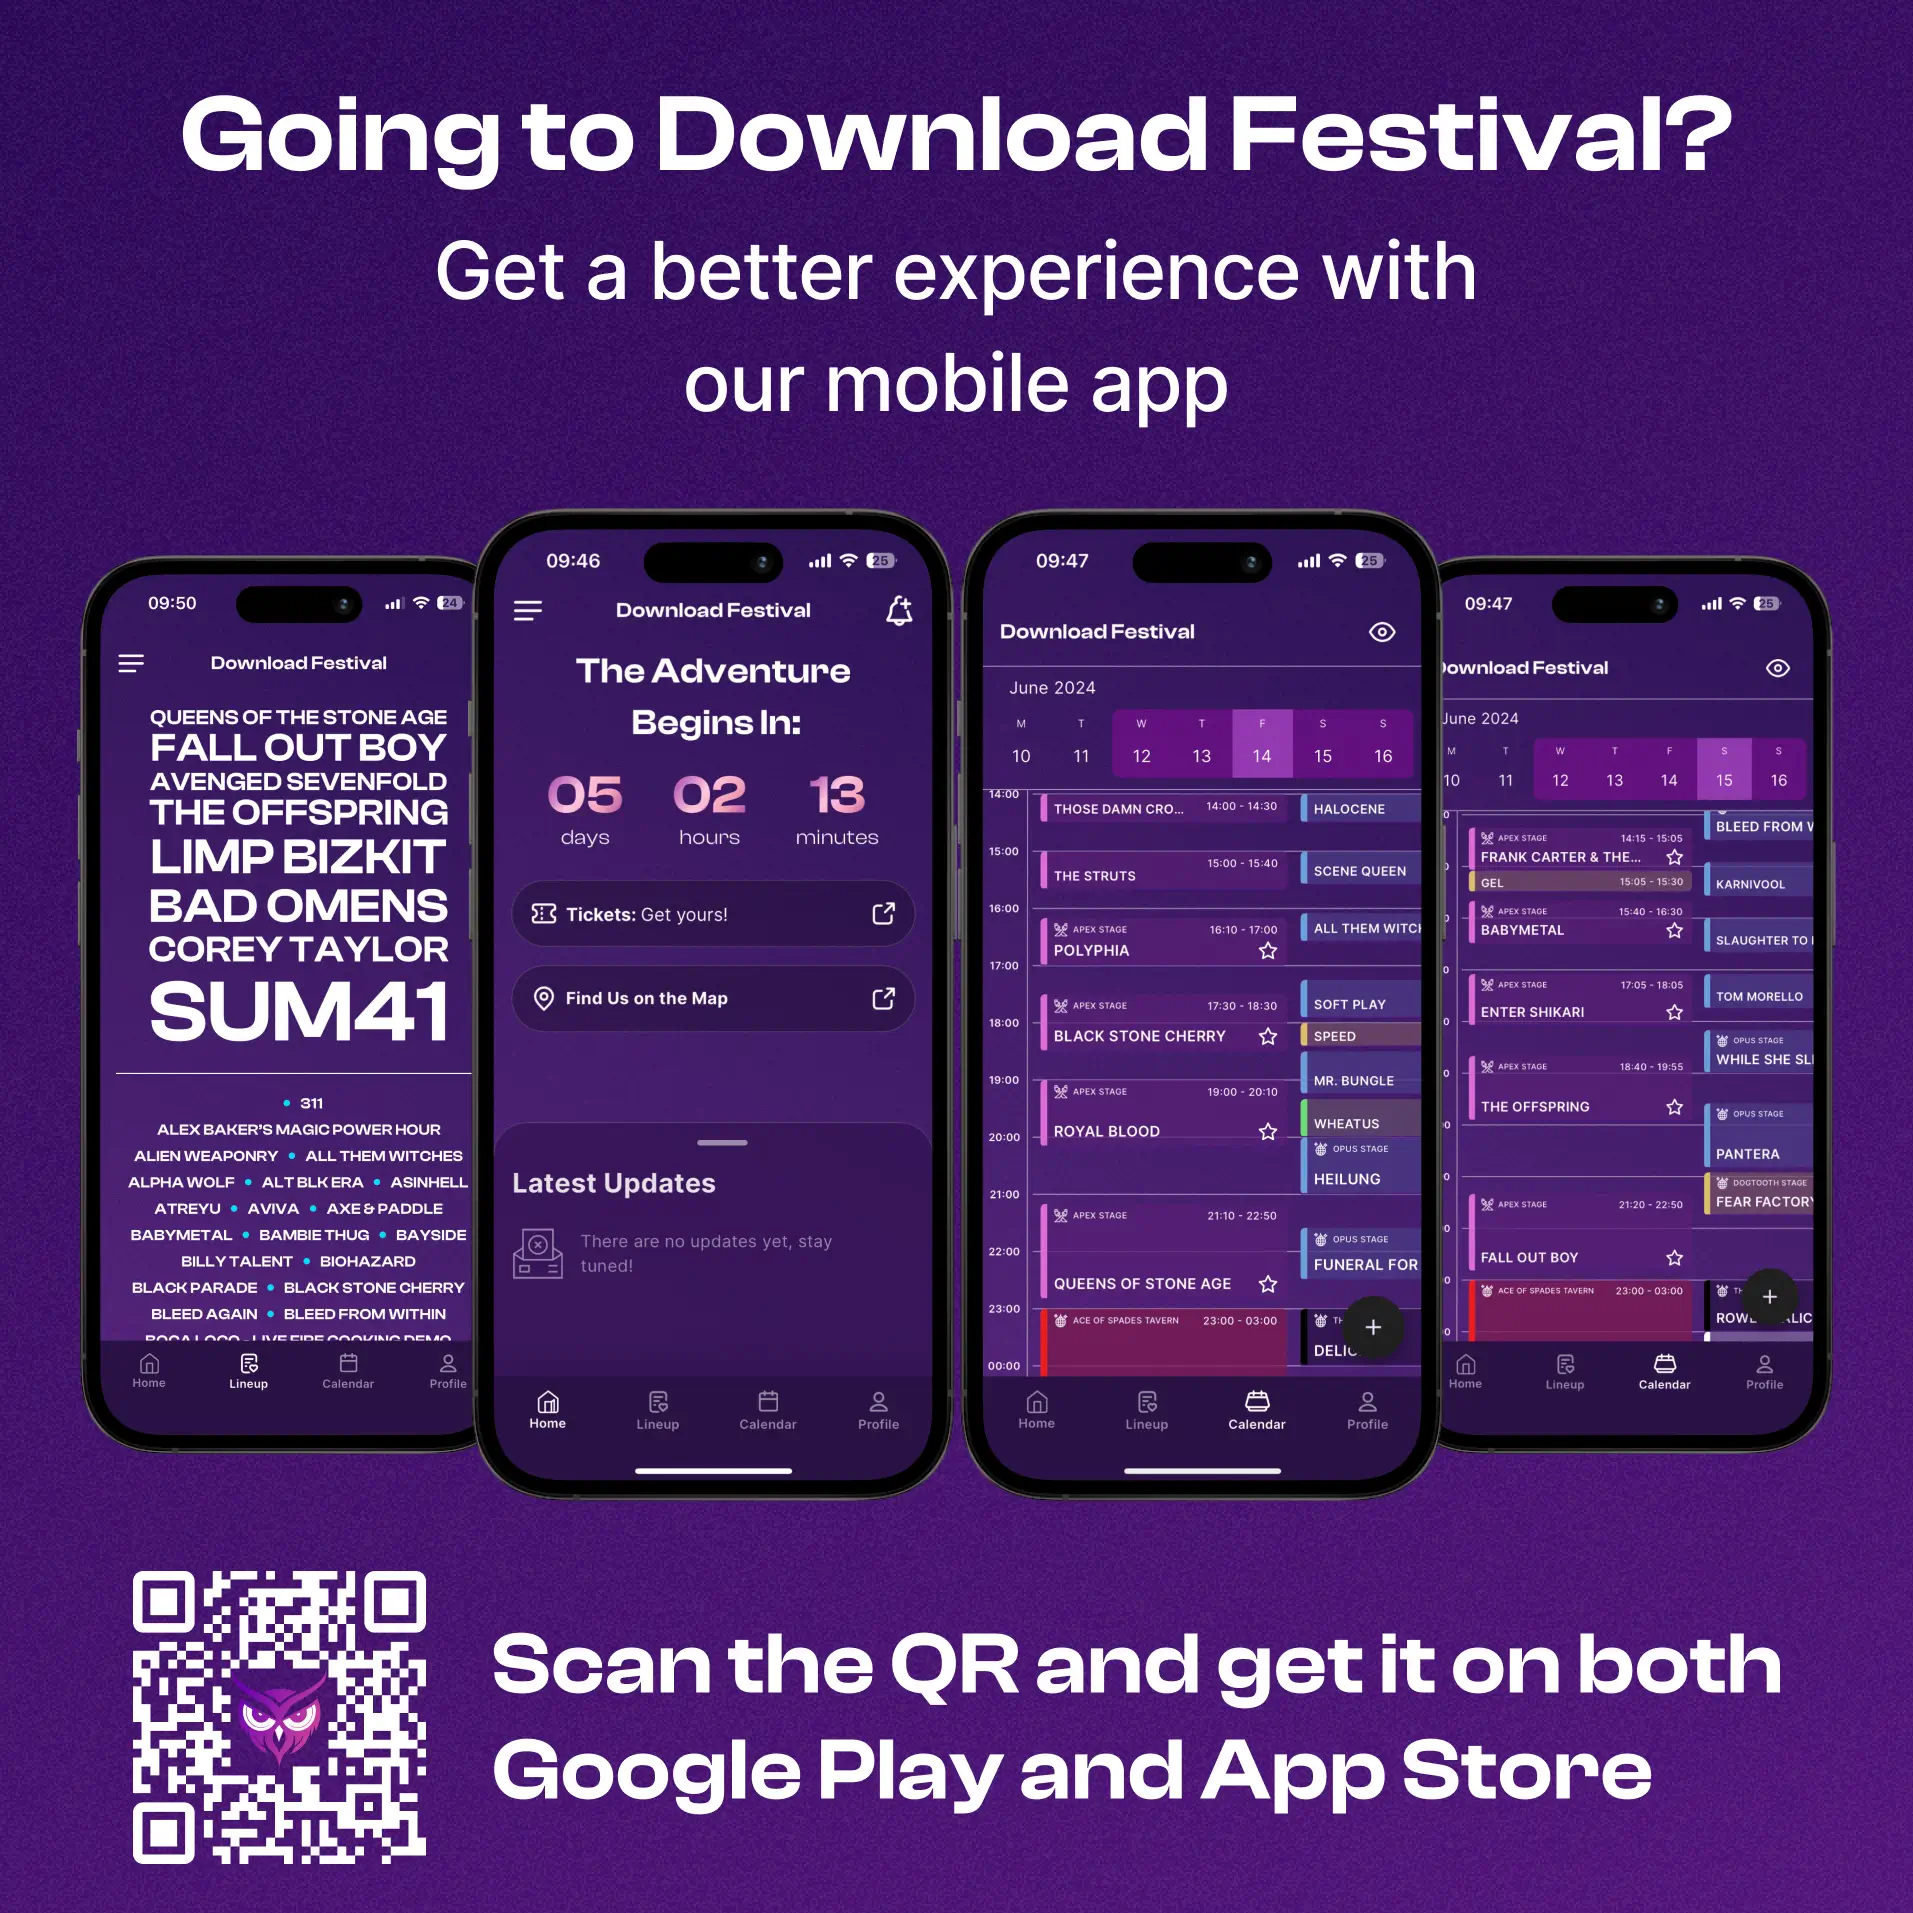 download festival set times